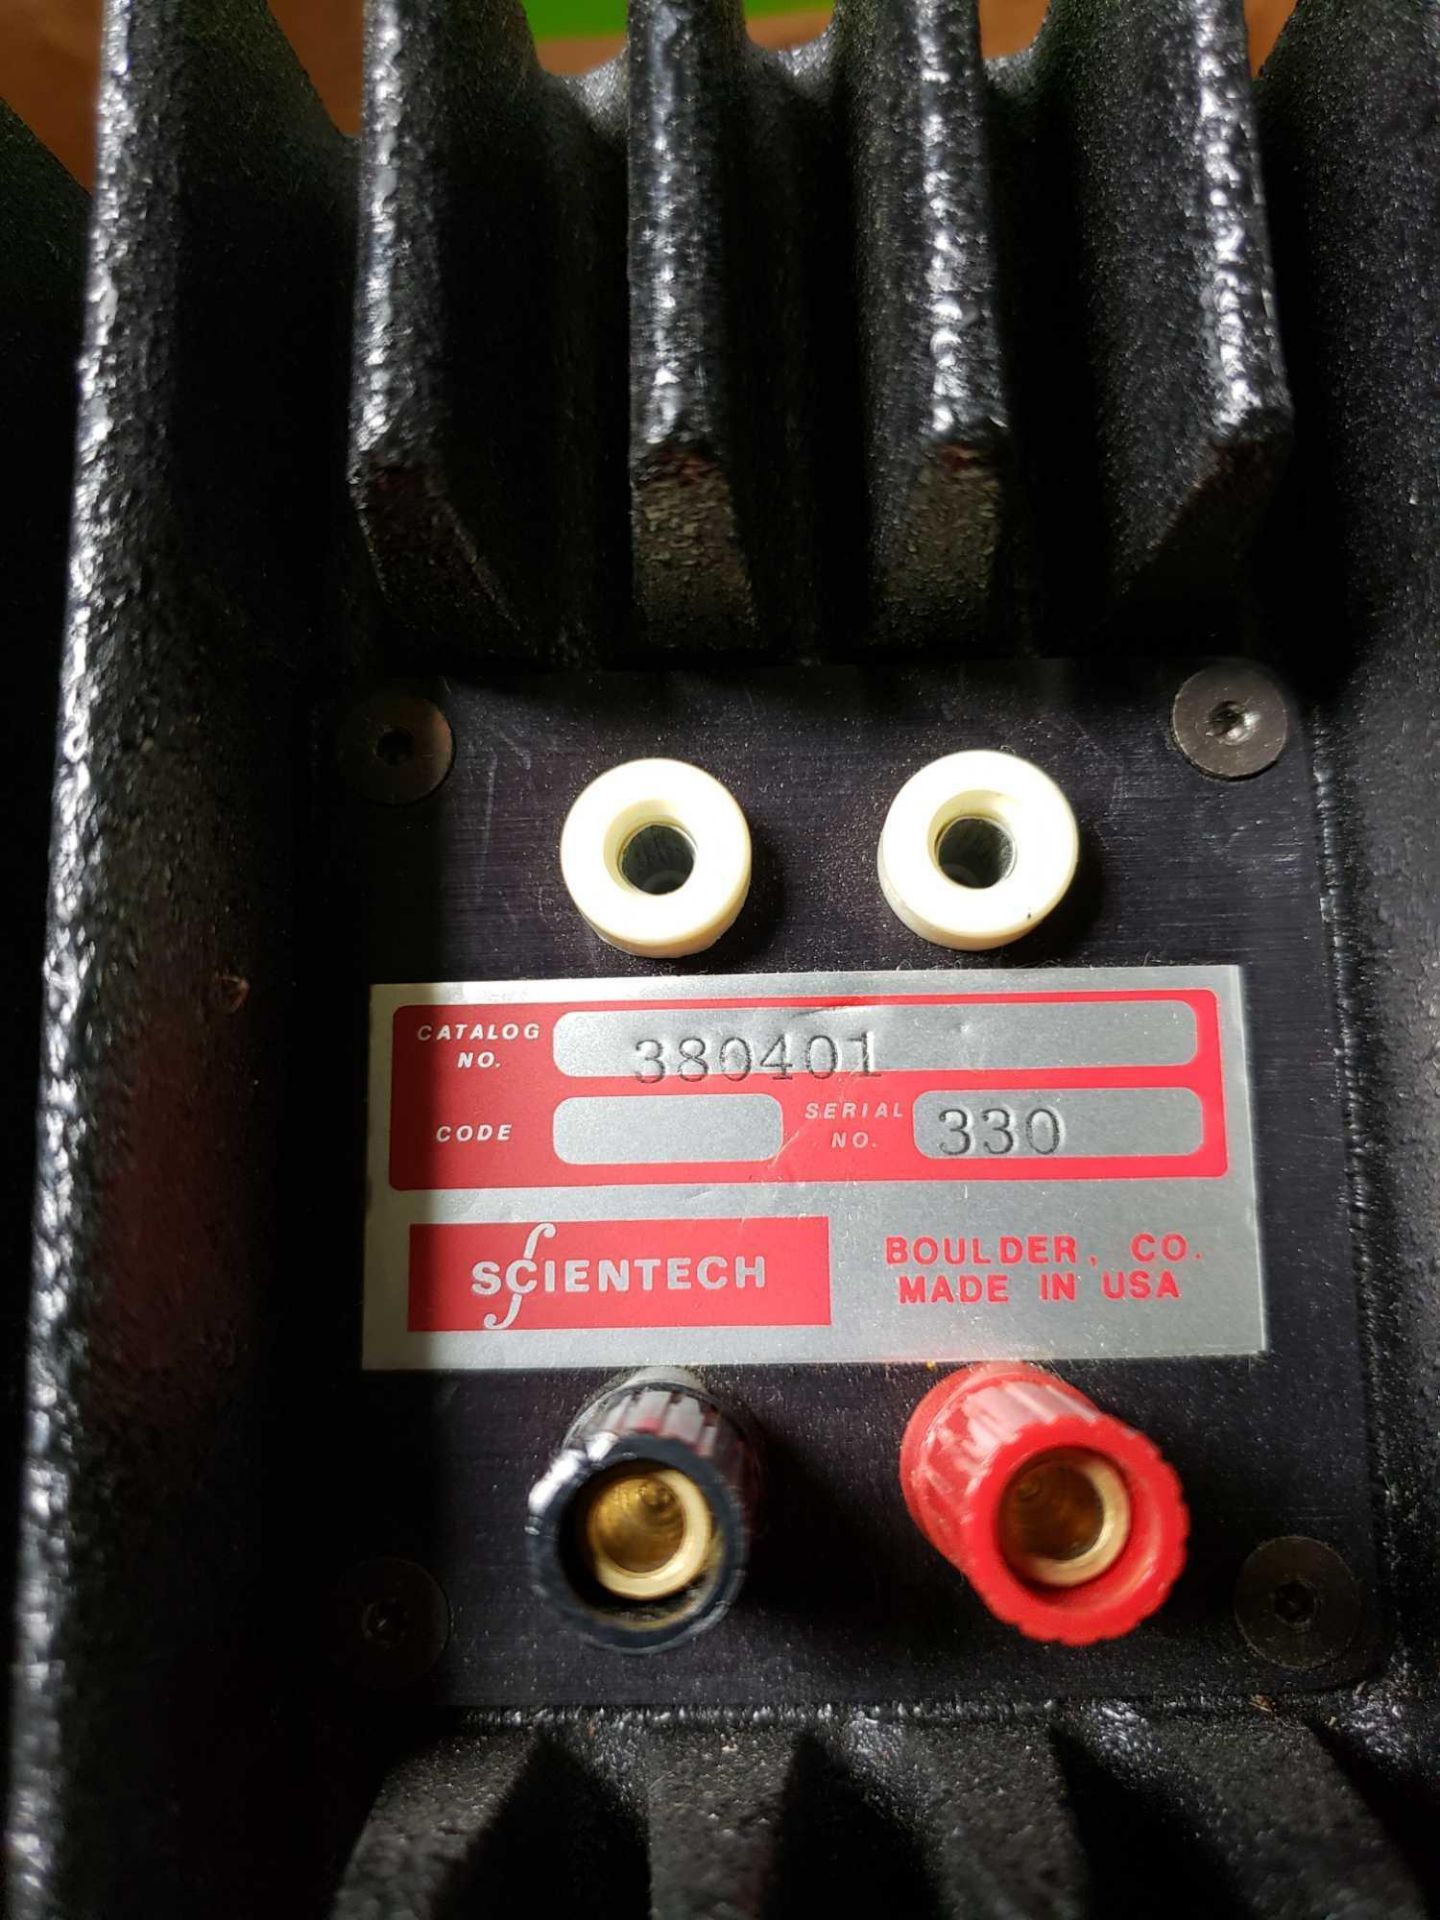 Scientech model 380401 large aperature calorimeter. - Image 2 of 2